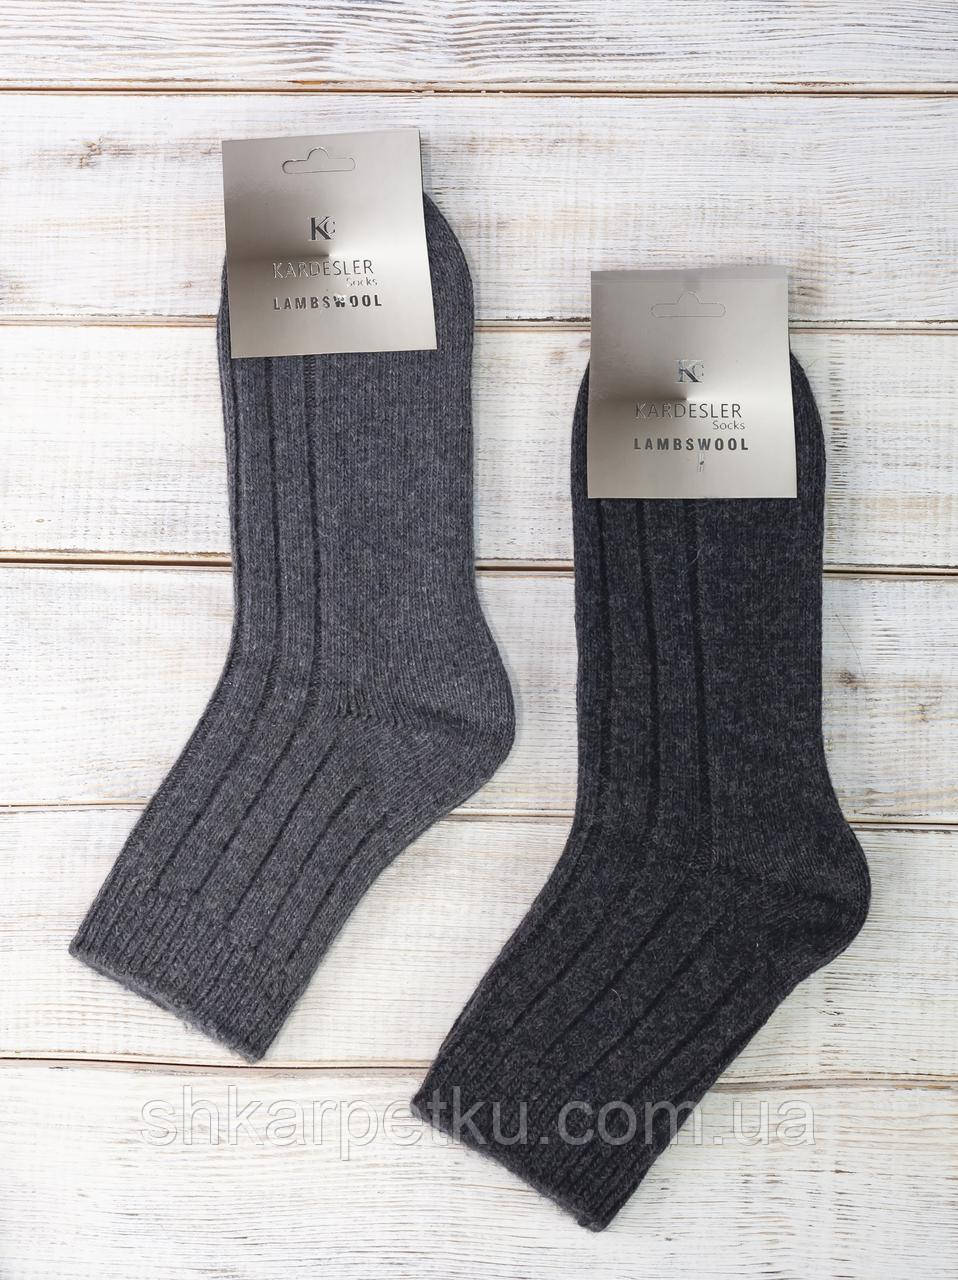 мужские носки из шерсти